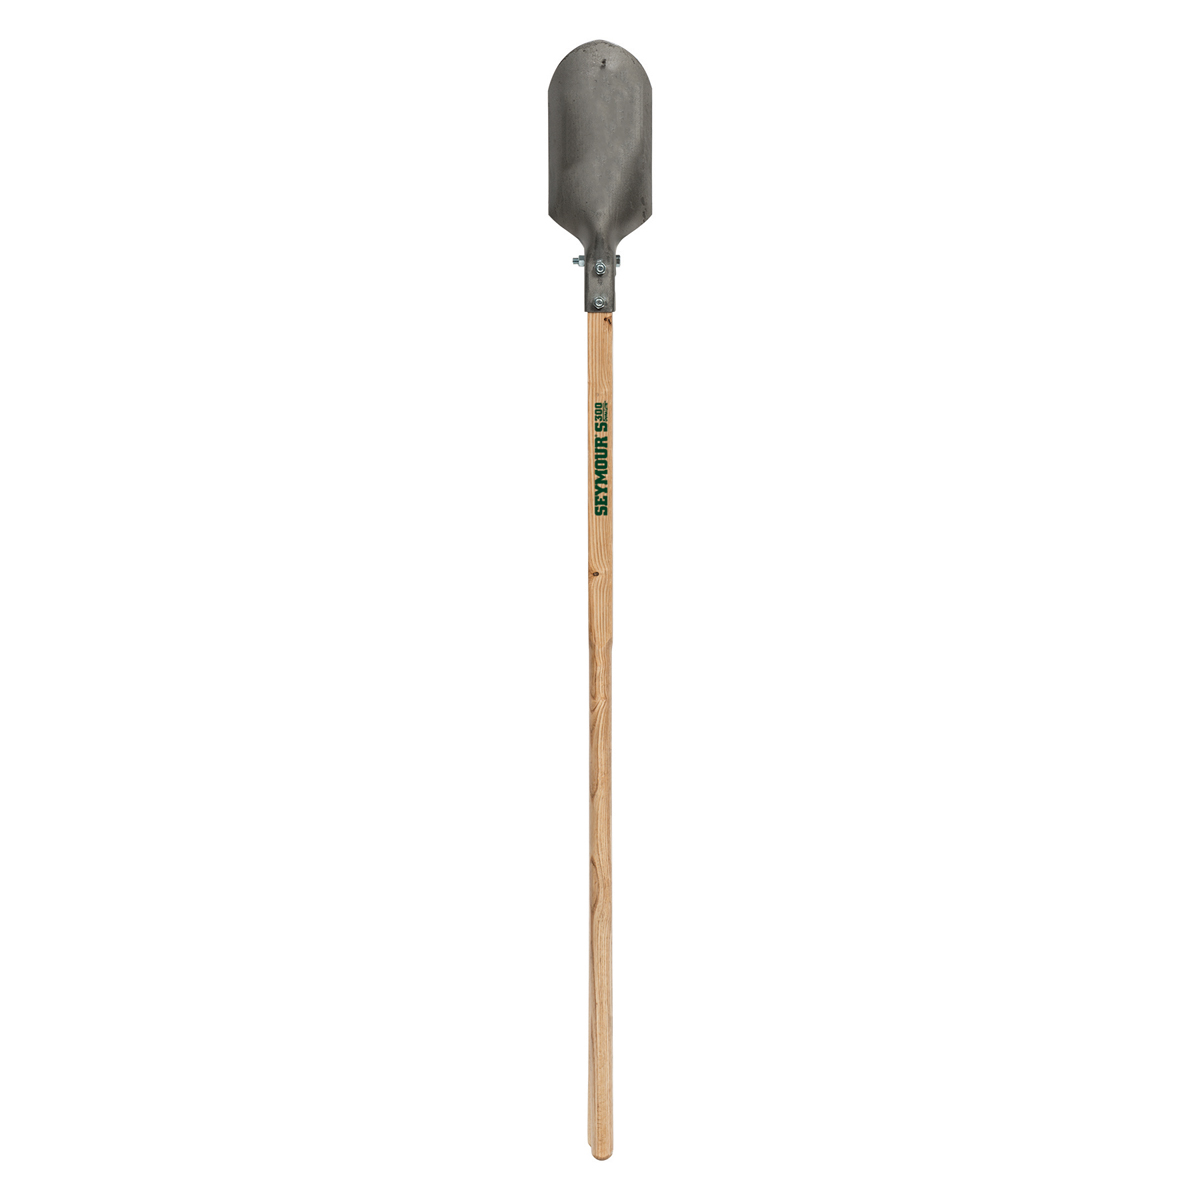 Seymour® 21060 Post Hole Digger, 48 in Handle Length, Hardwood Handle, 5 in Distance Between Blade Tips